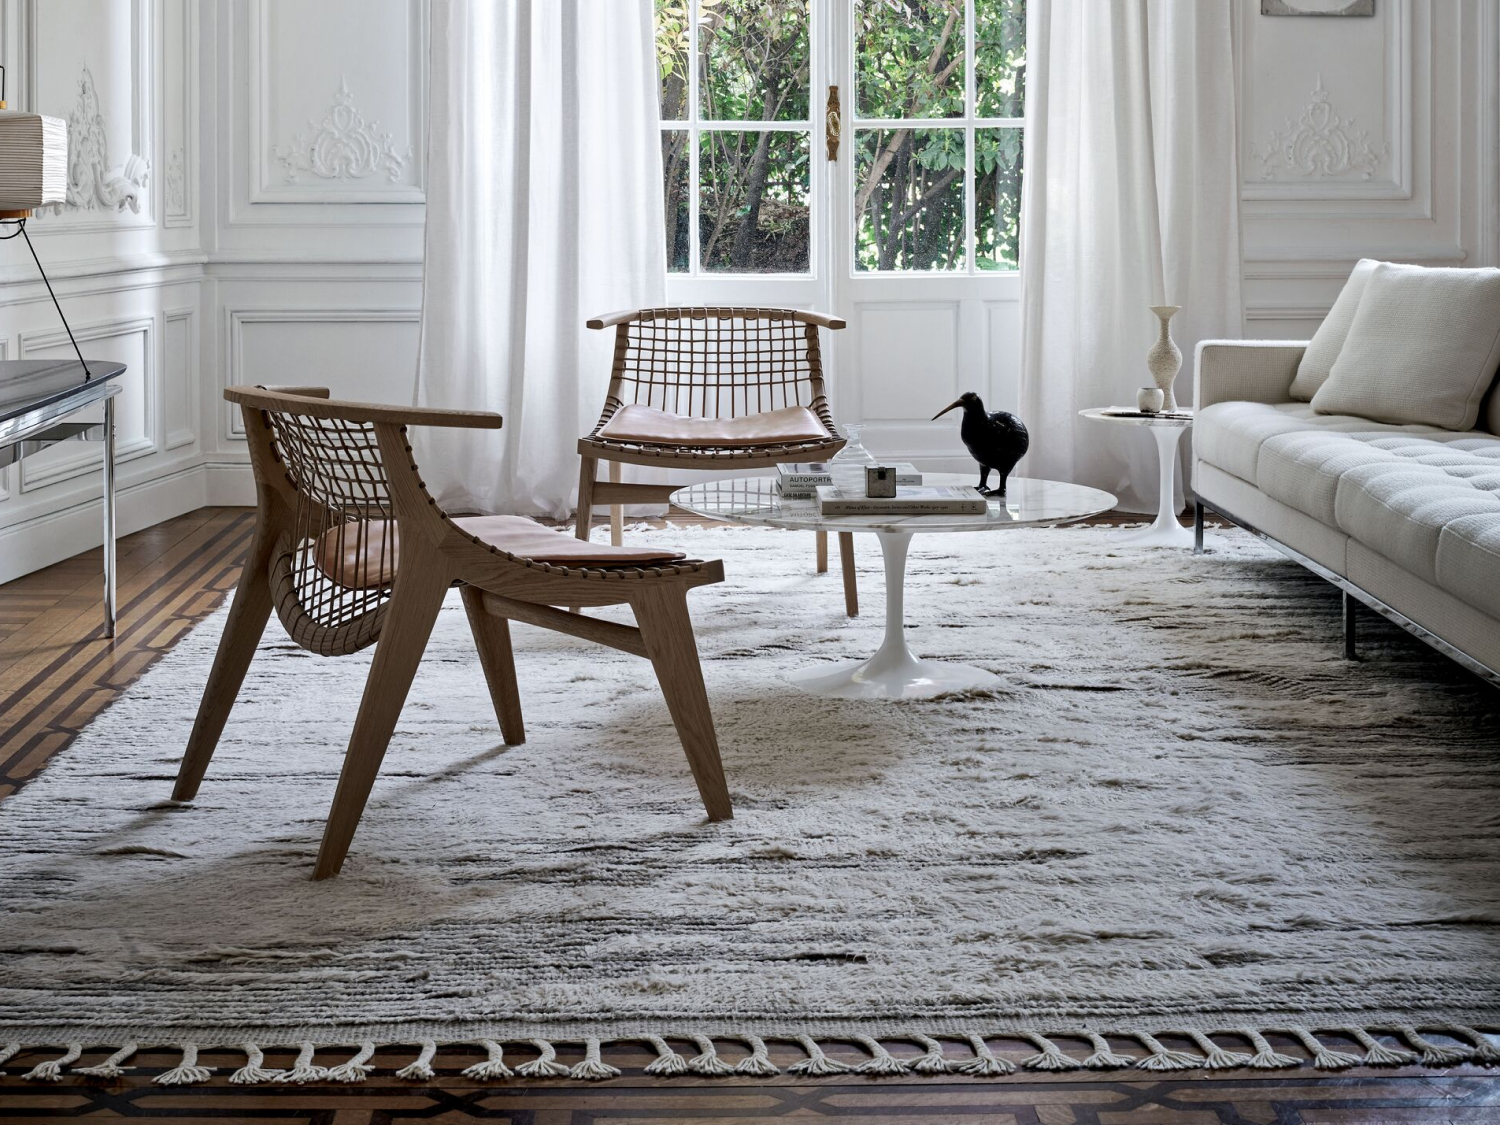 Klismos Lounge Chairs and Saarinen Coffee Table